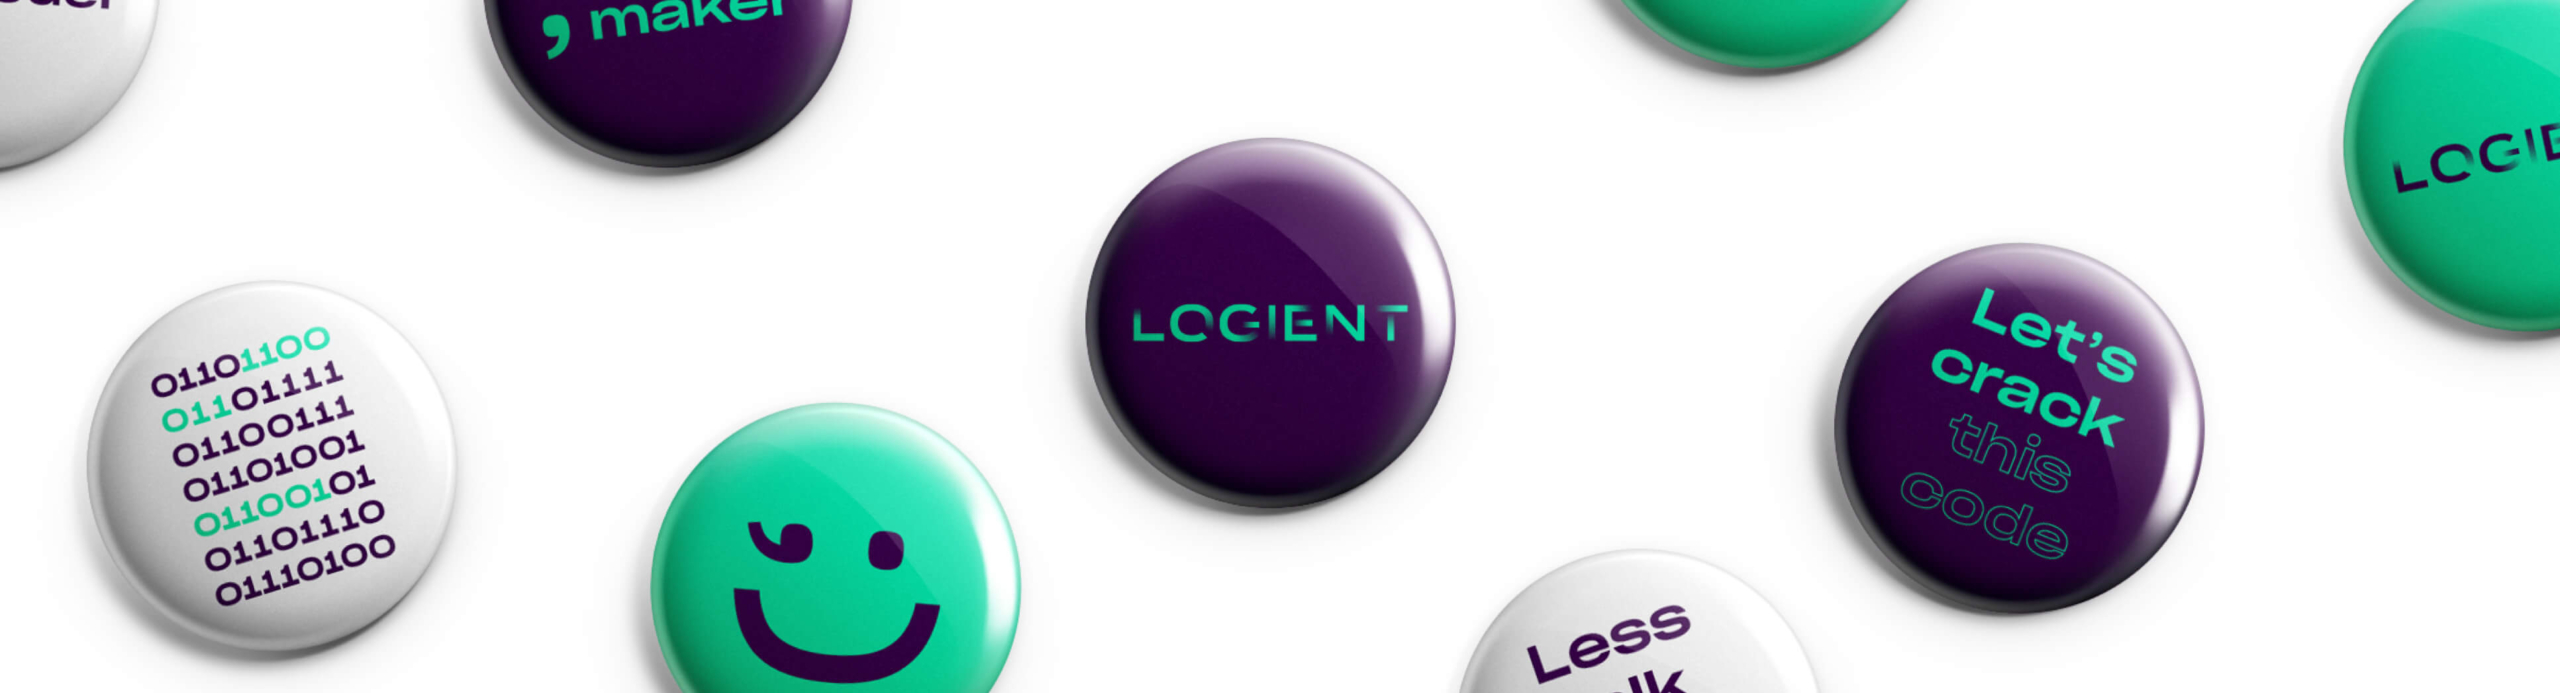 New Branding Logient, Code Serving the World!